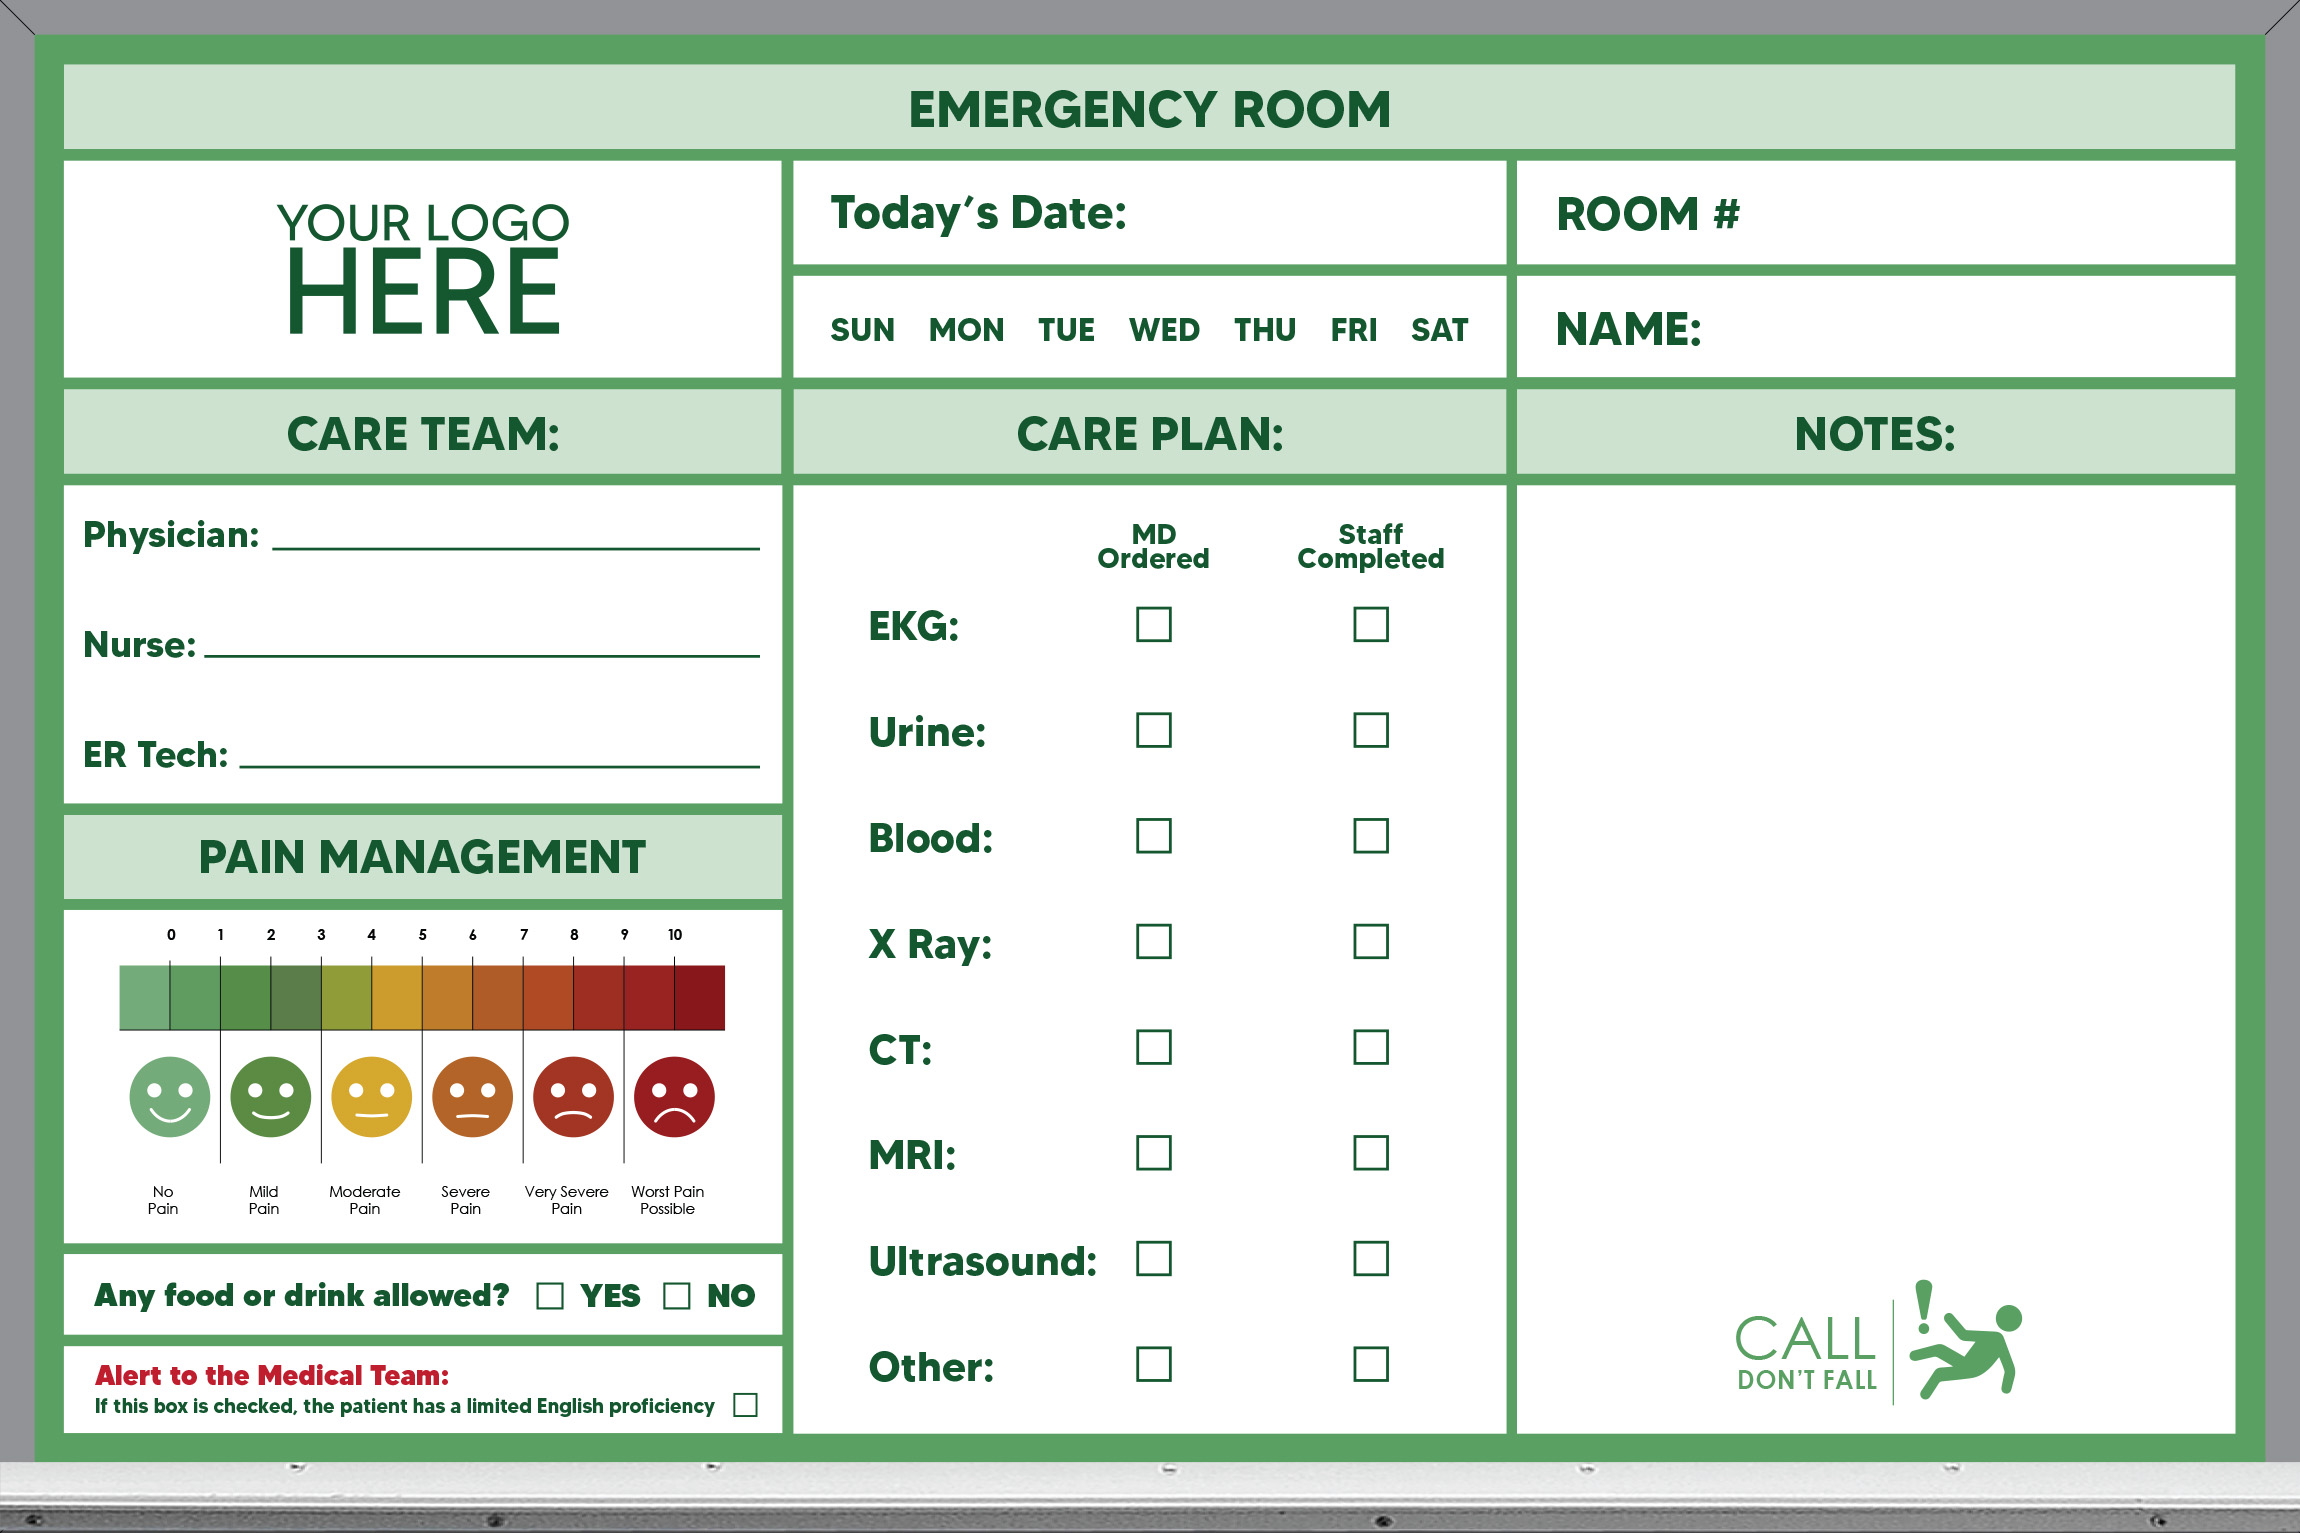 2x3 emergency room whiteboard - pre-printed, green background, add your logo